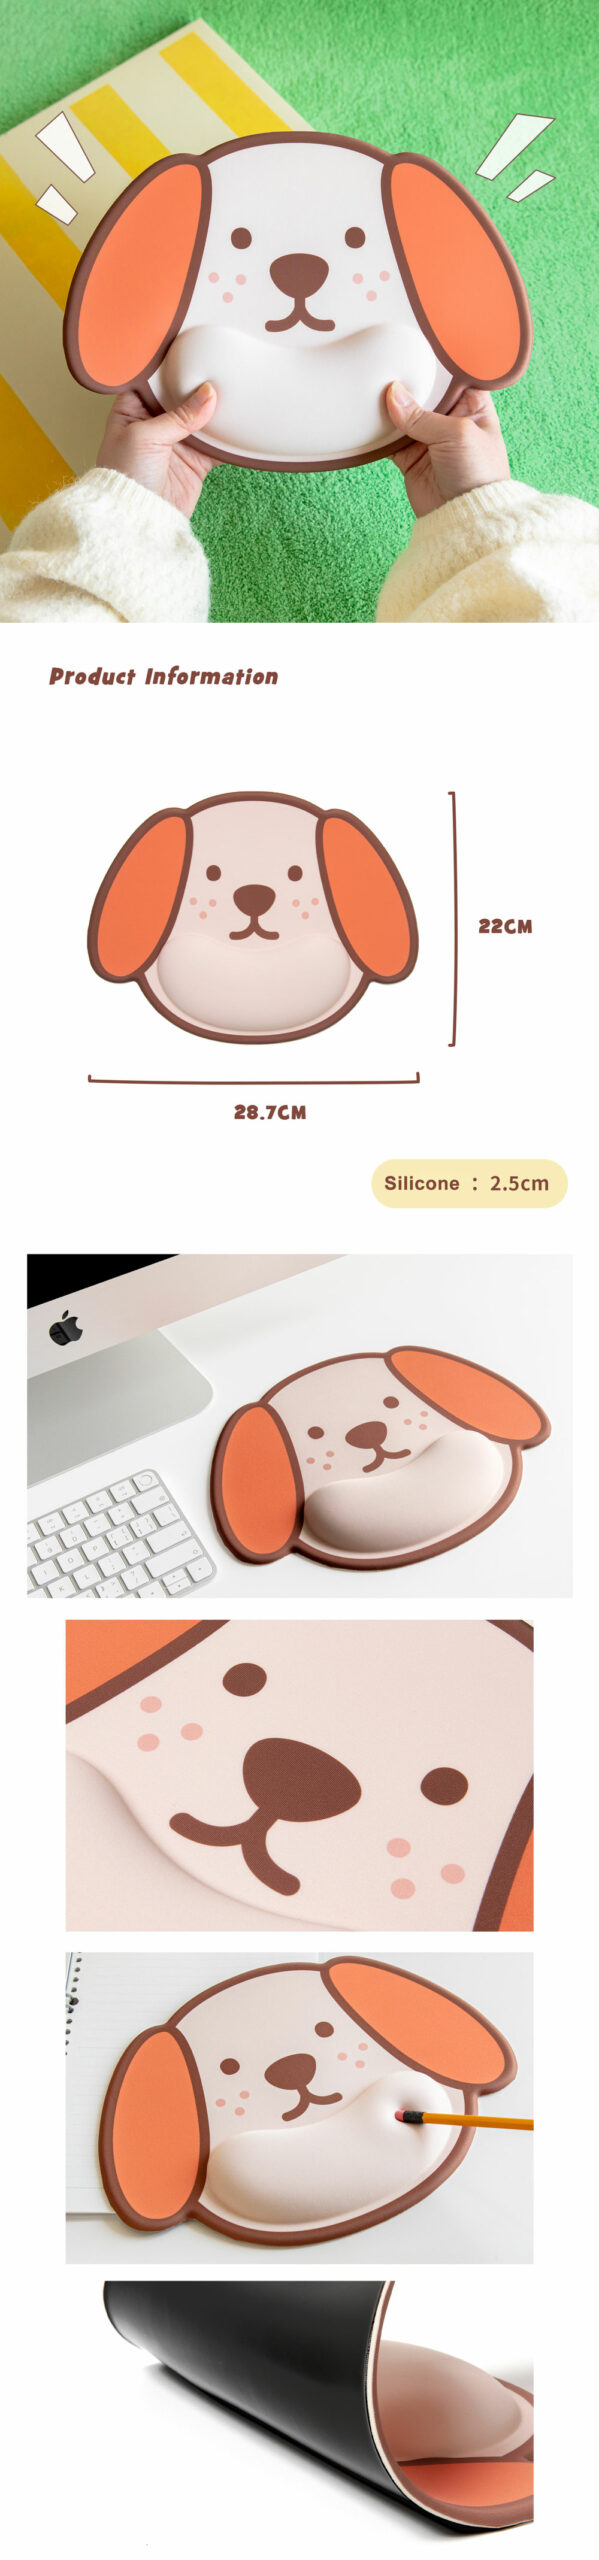 Cute 3D Mouse Pad Product Details 2